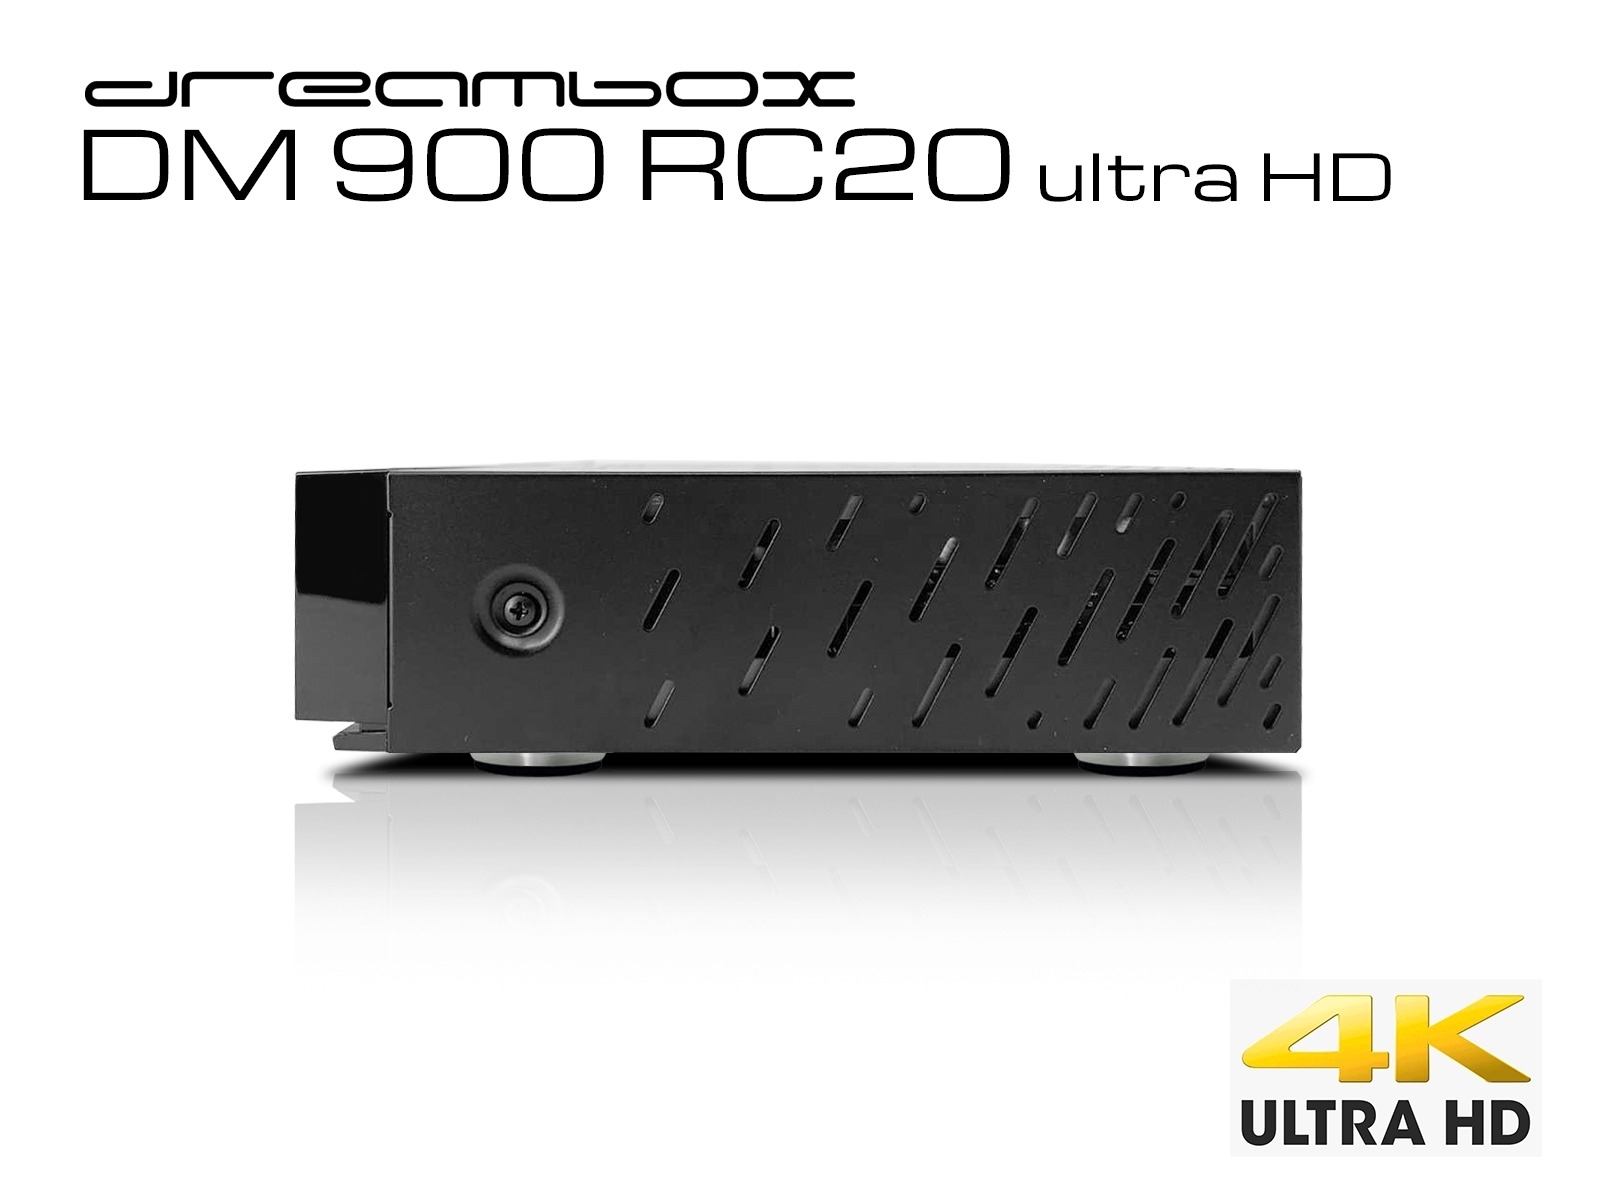 Dreambox DM900 RC20 UHD 4K 1x DVB-C FBC Tuner E2 Linux PVR ready Receiver